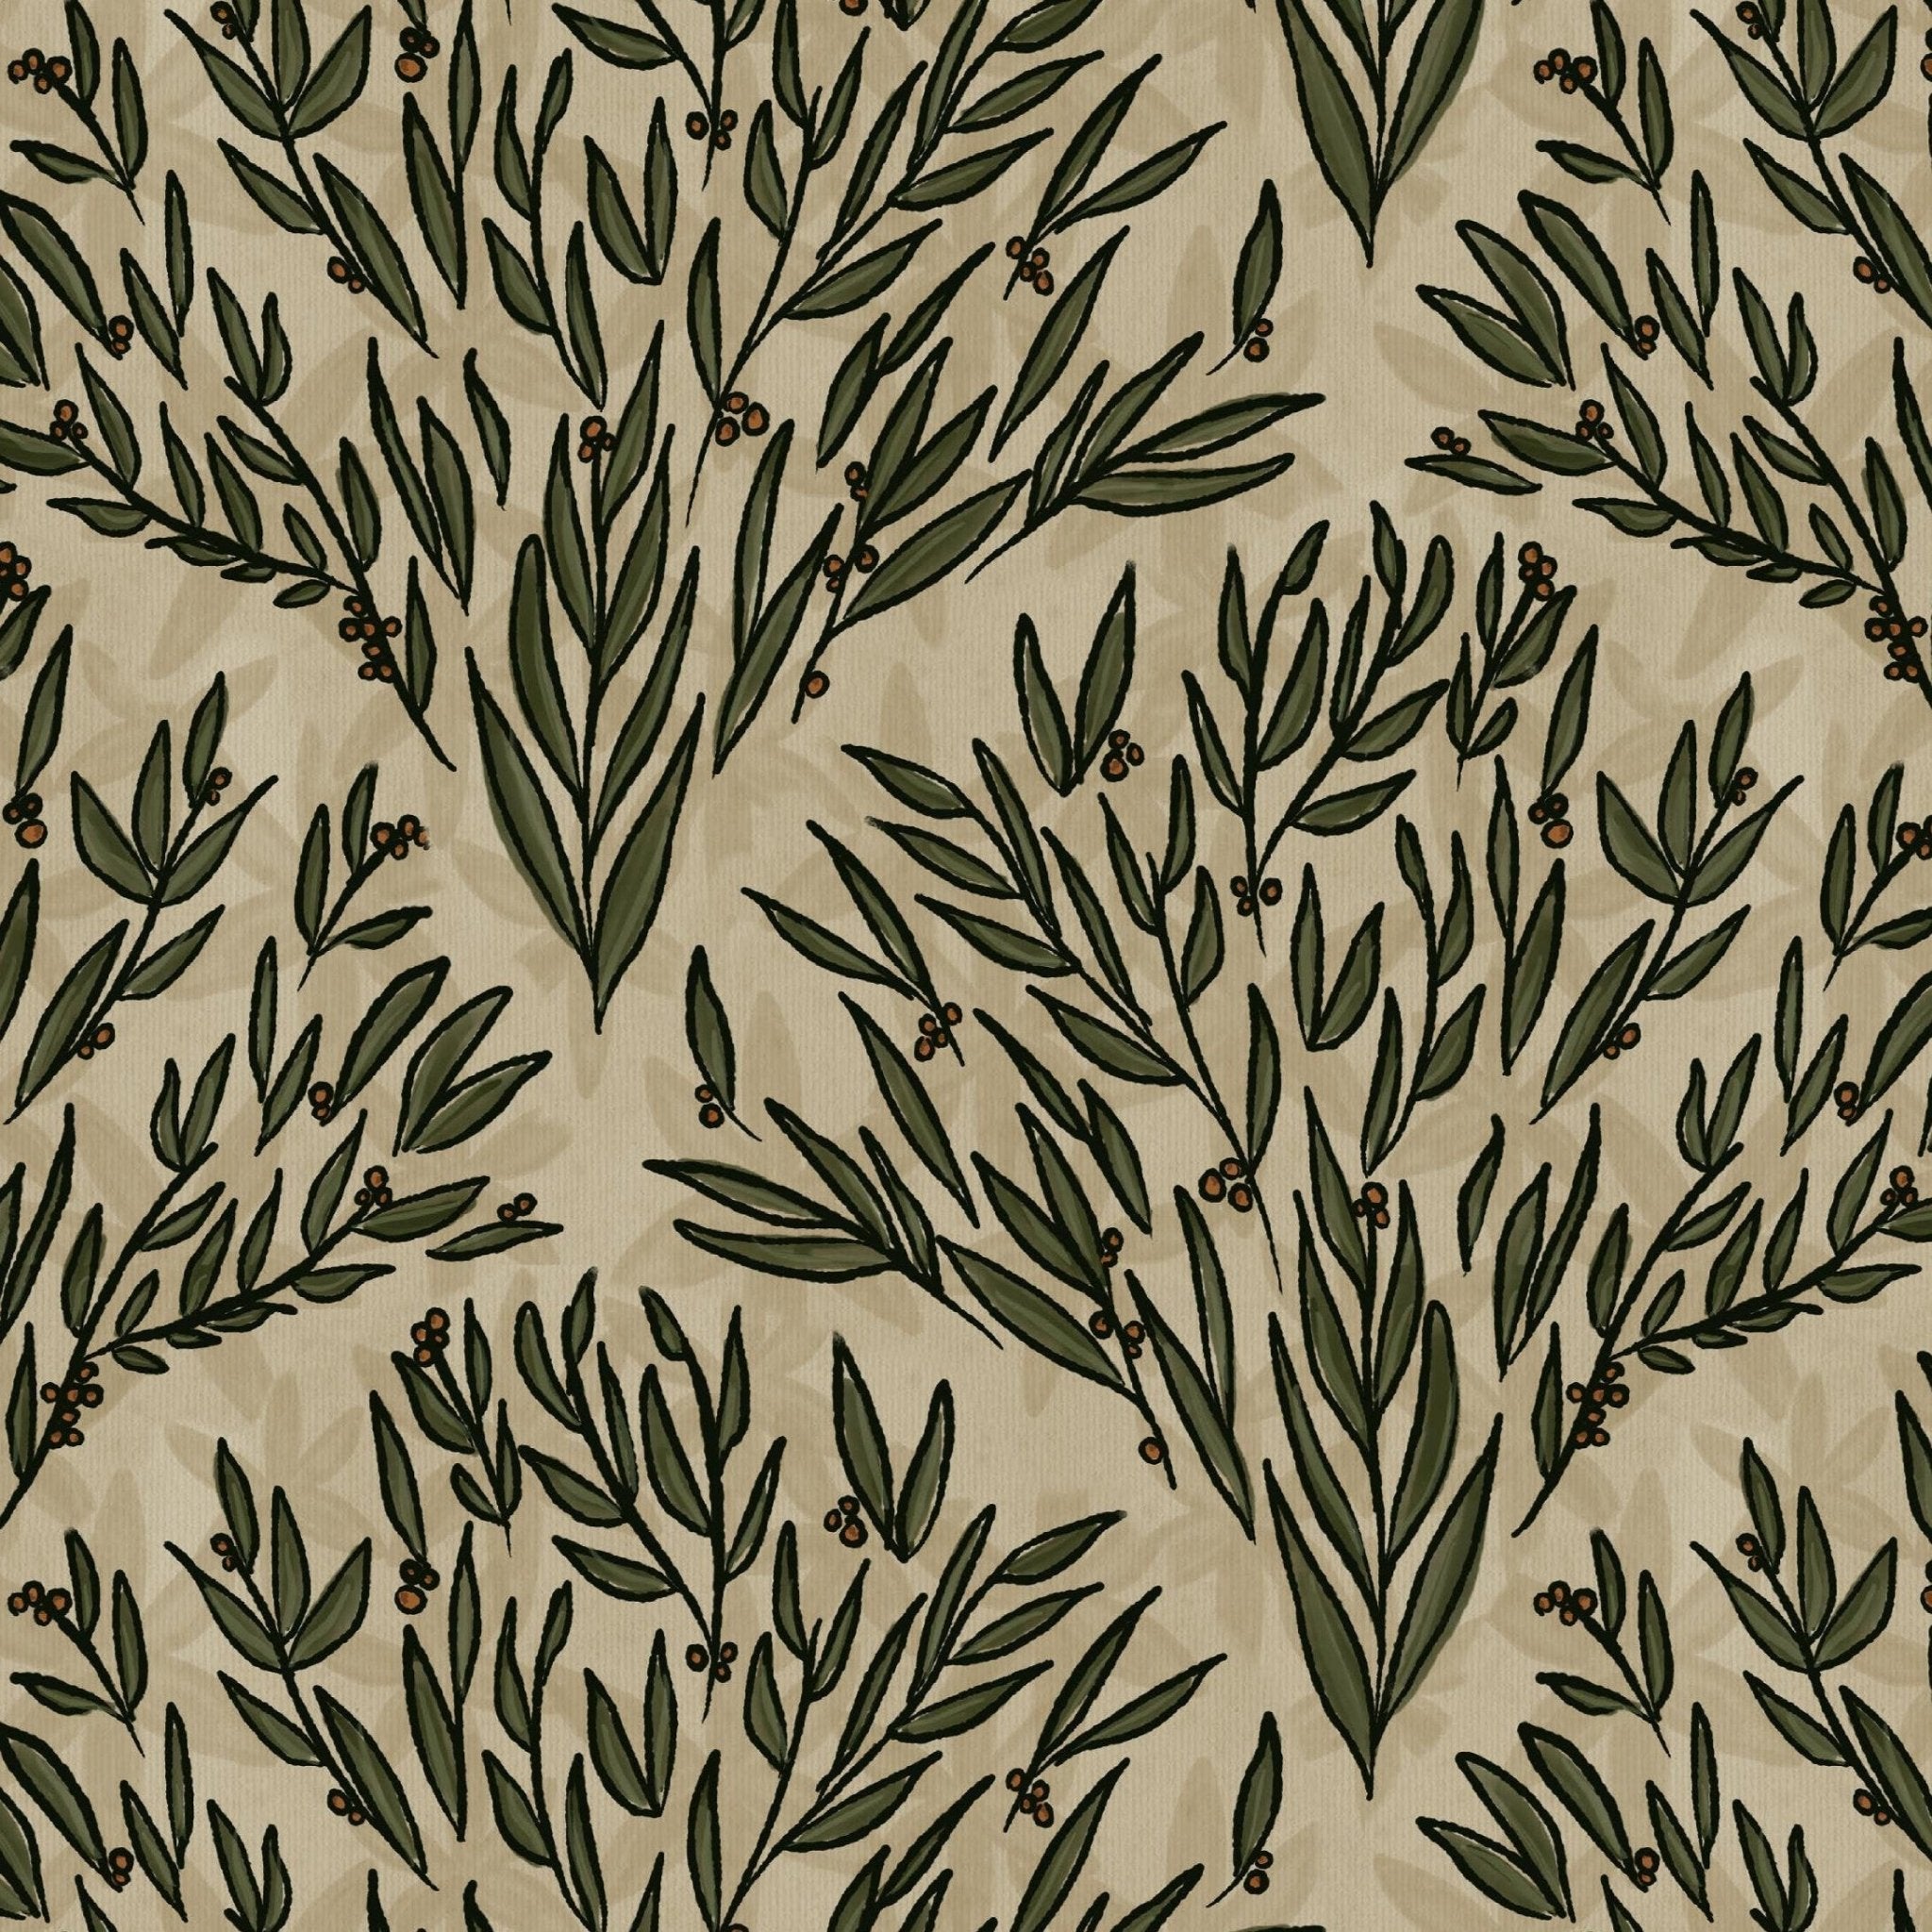 Olive branch removable wallpaper sample